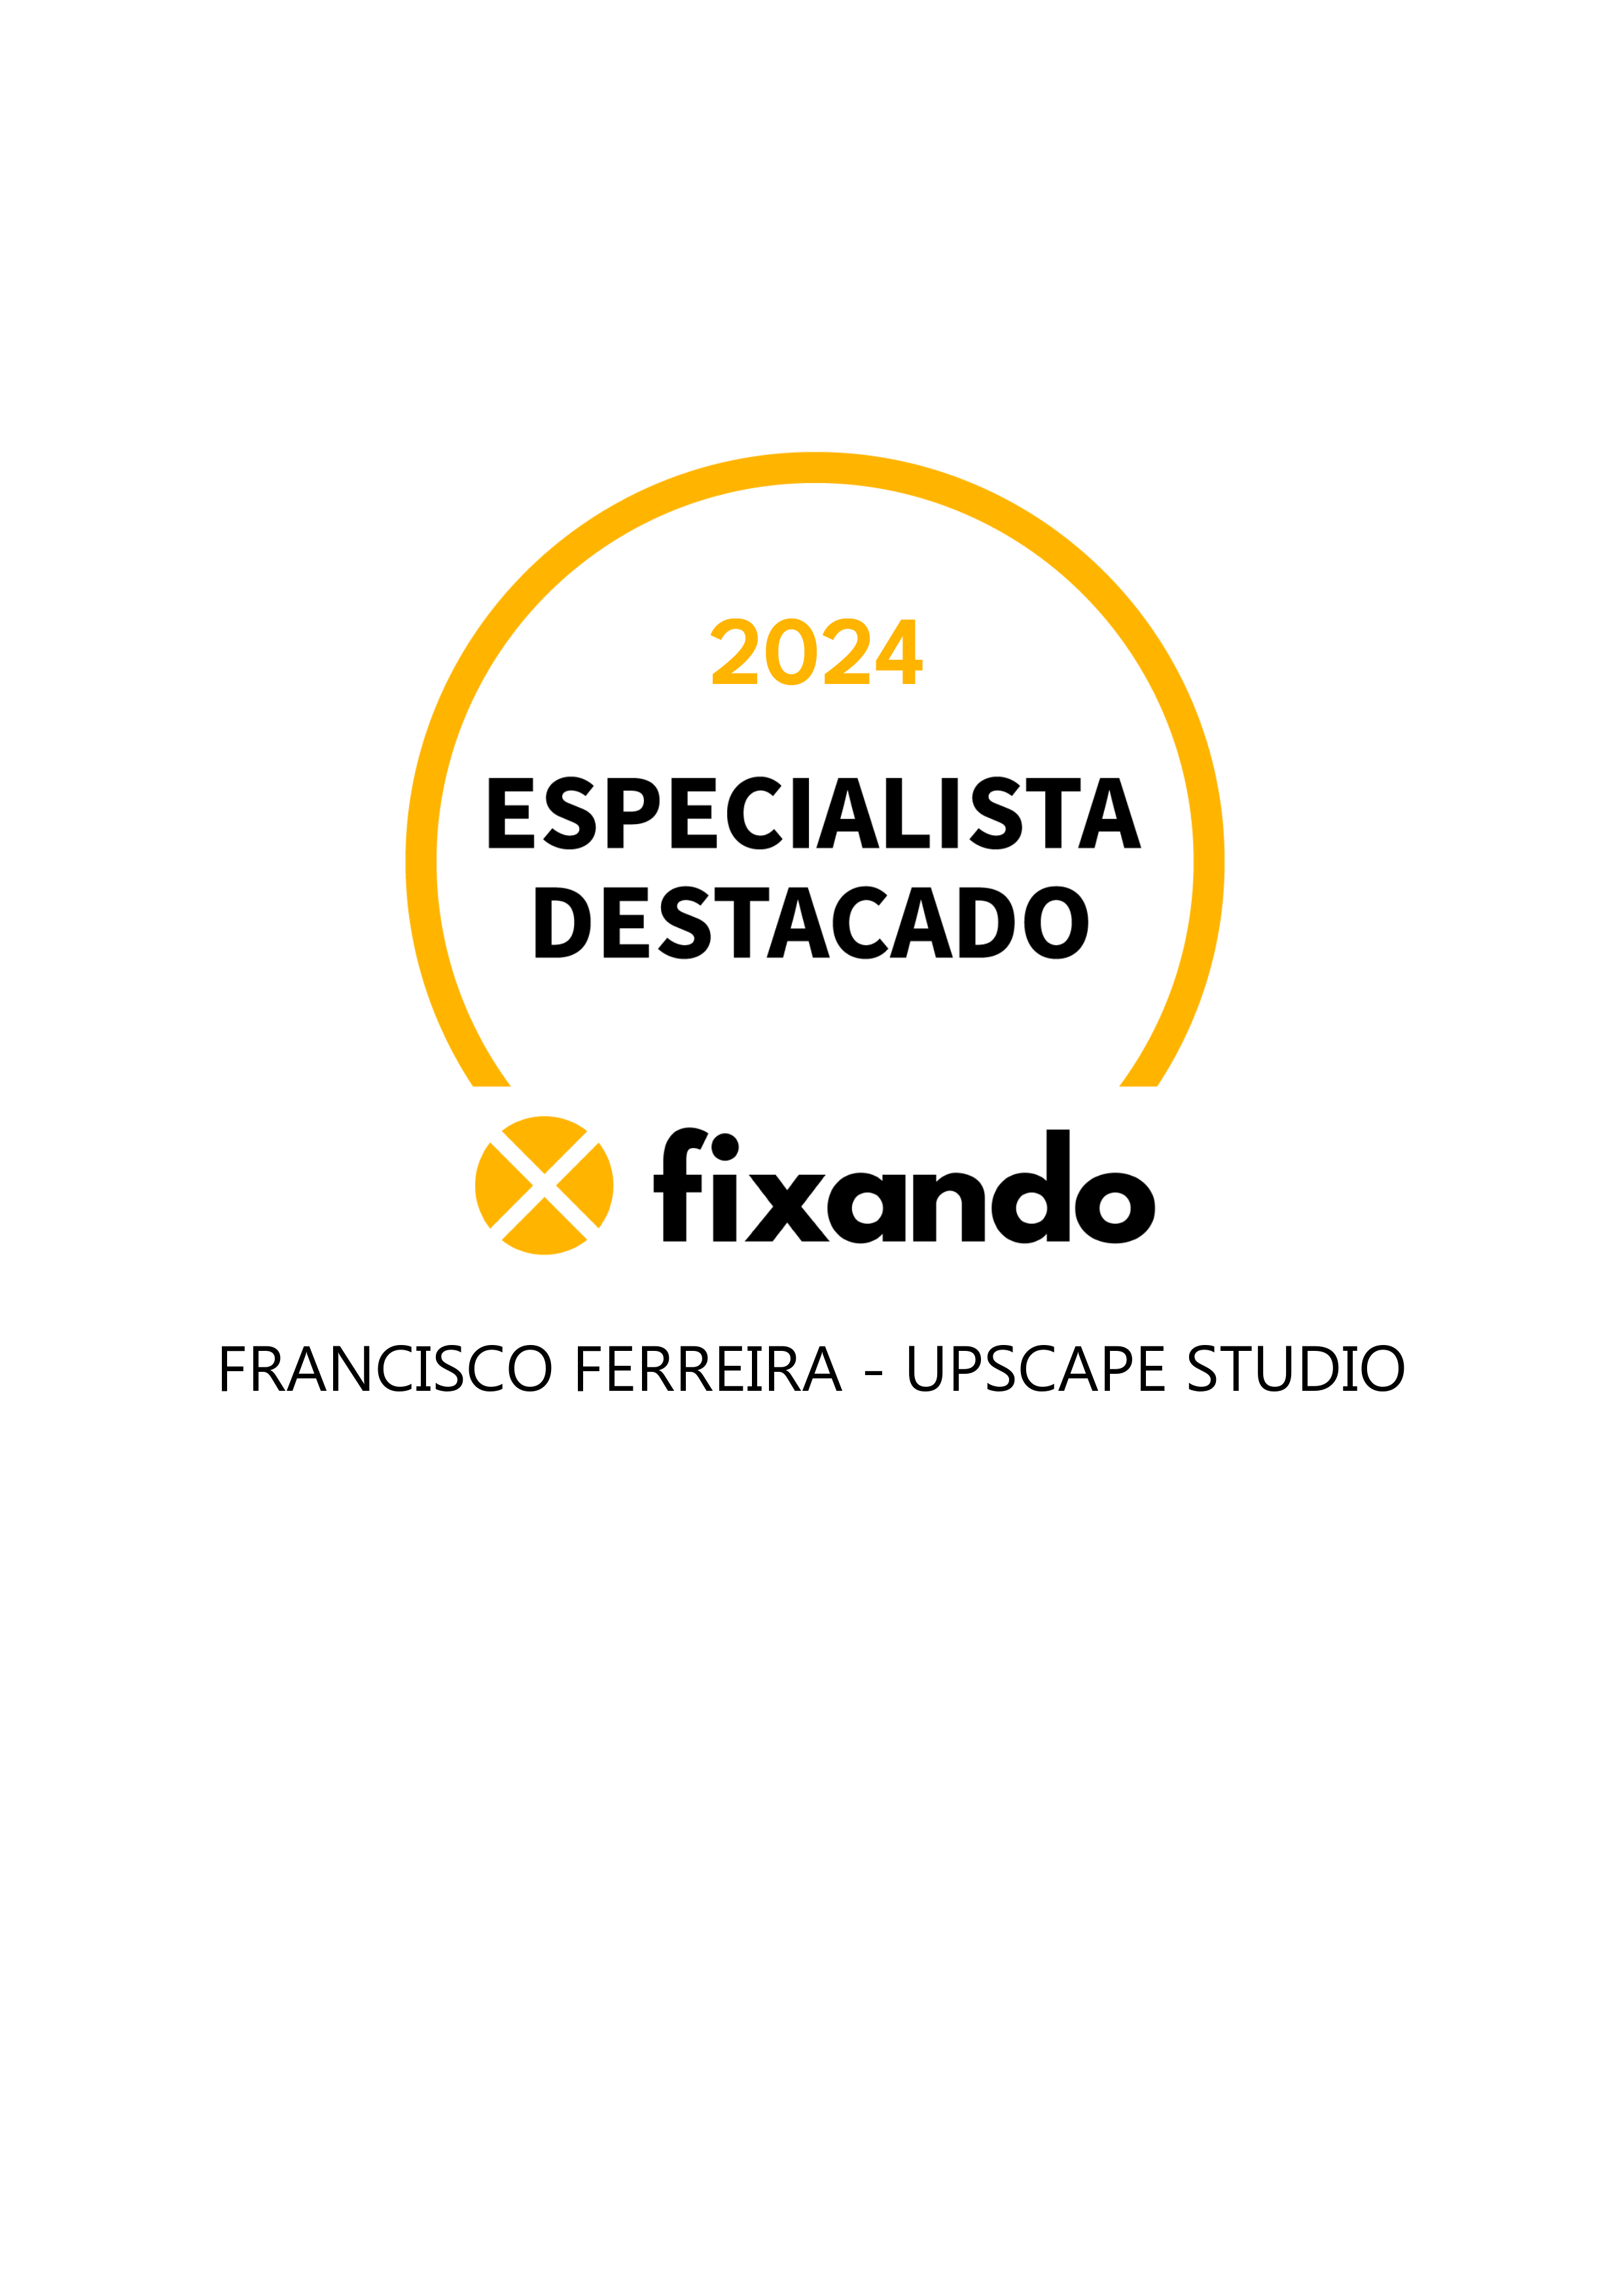 Francisco Ferreira - Upscape Studio - Lisboa - Web Design e Web Development